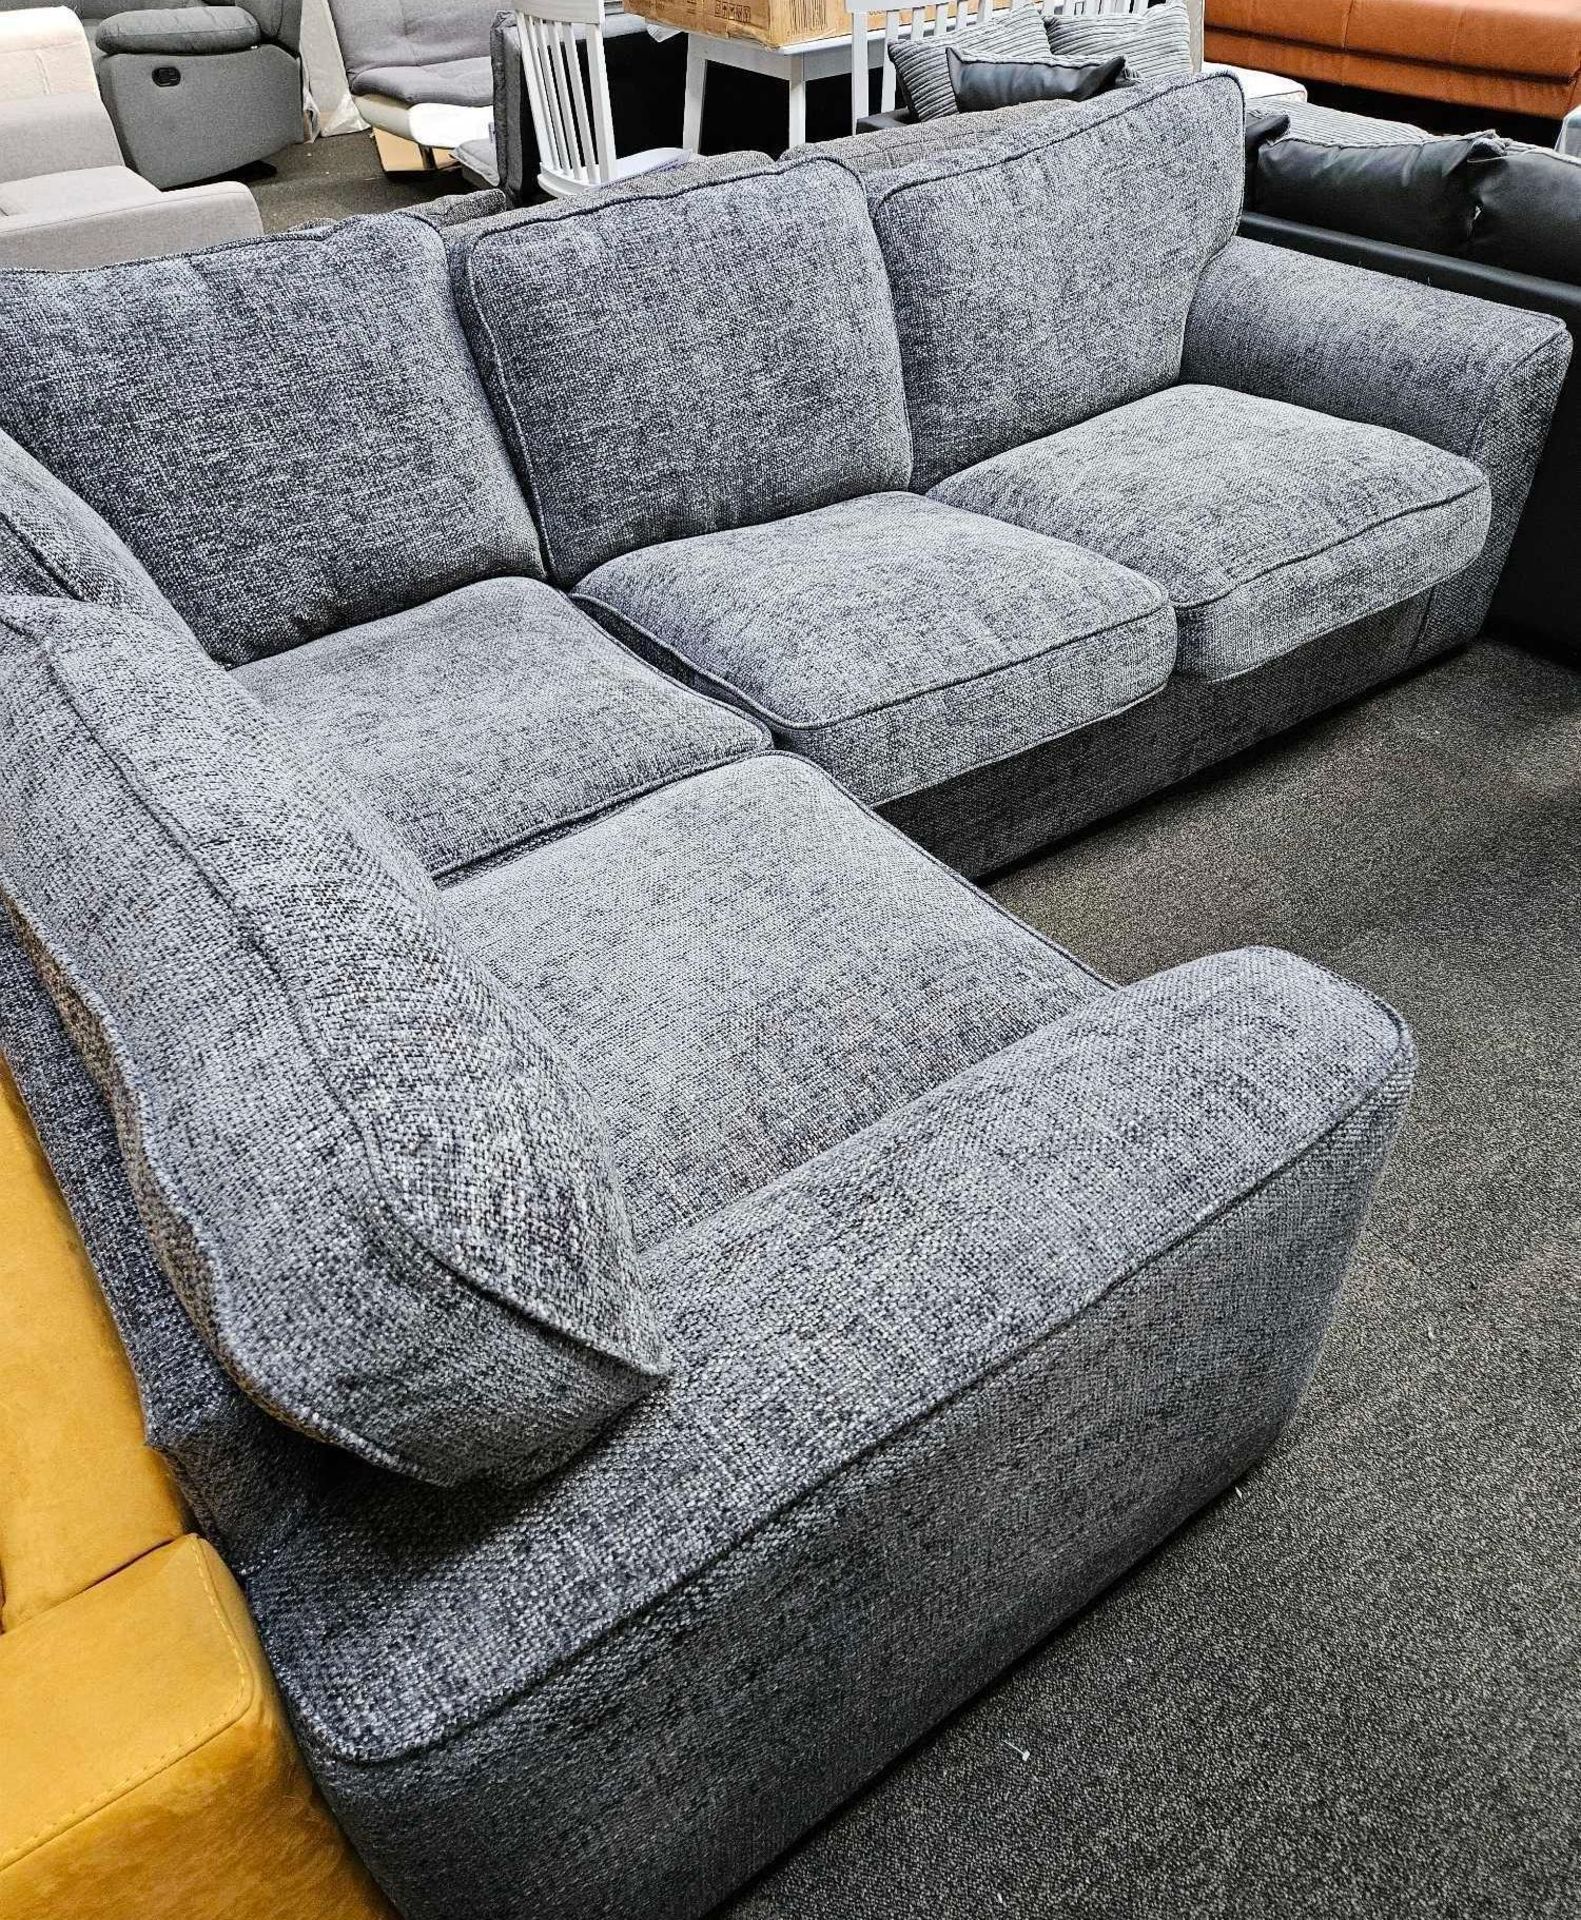 *EX DISPLAY* Furniture village Emilia corner sofa/sofa bed in hopsack dark grey - Image 2 of 5